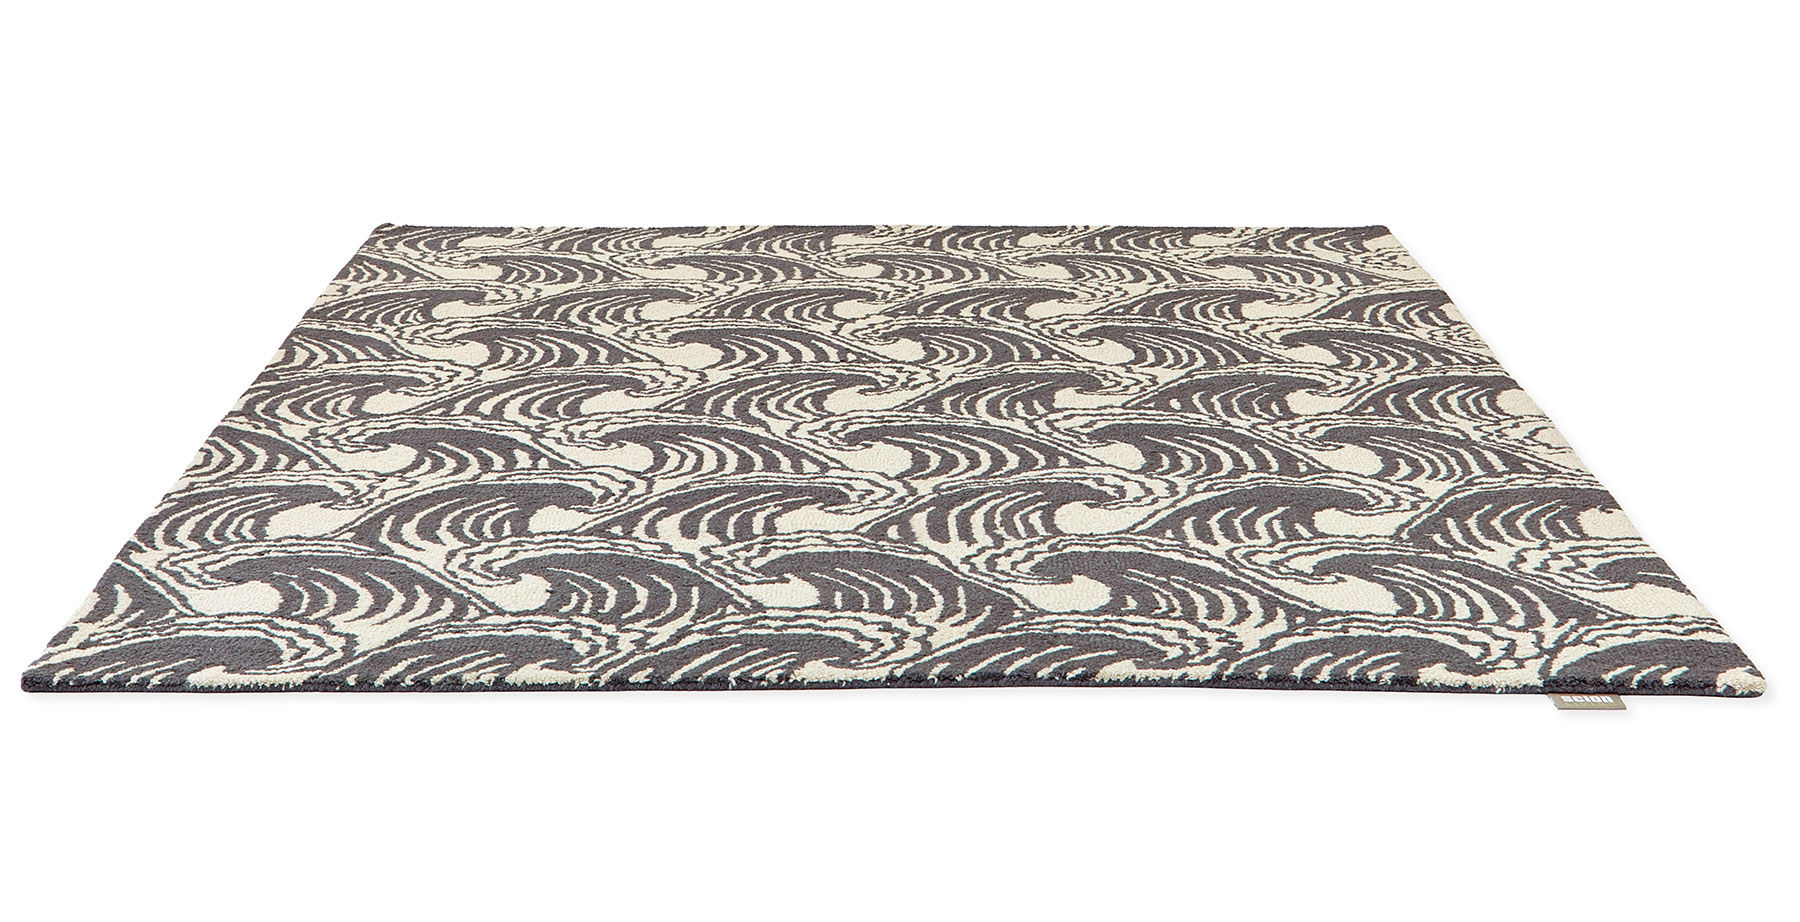 Waves Beige / Grey Rug ☞ Size: 4' x 6' (120 x 180 cm)